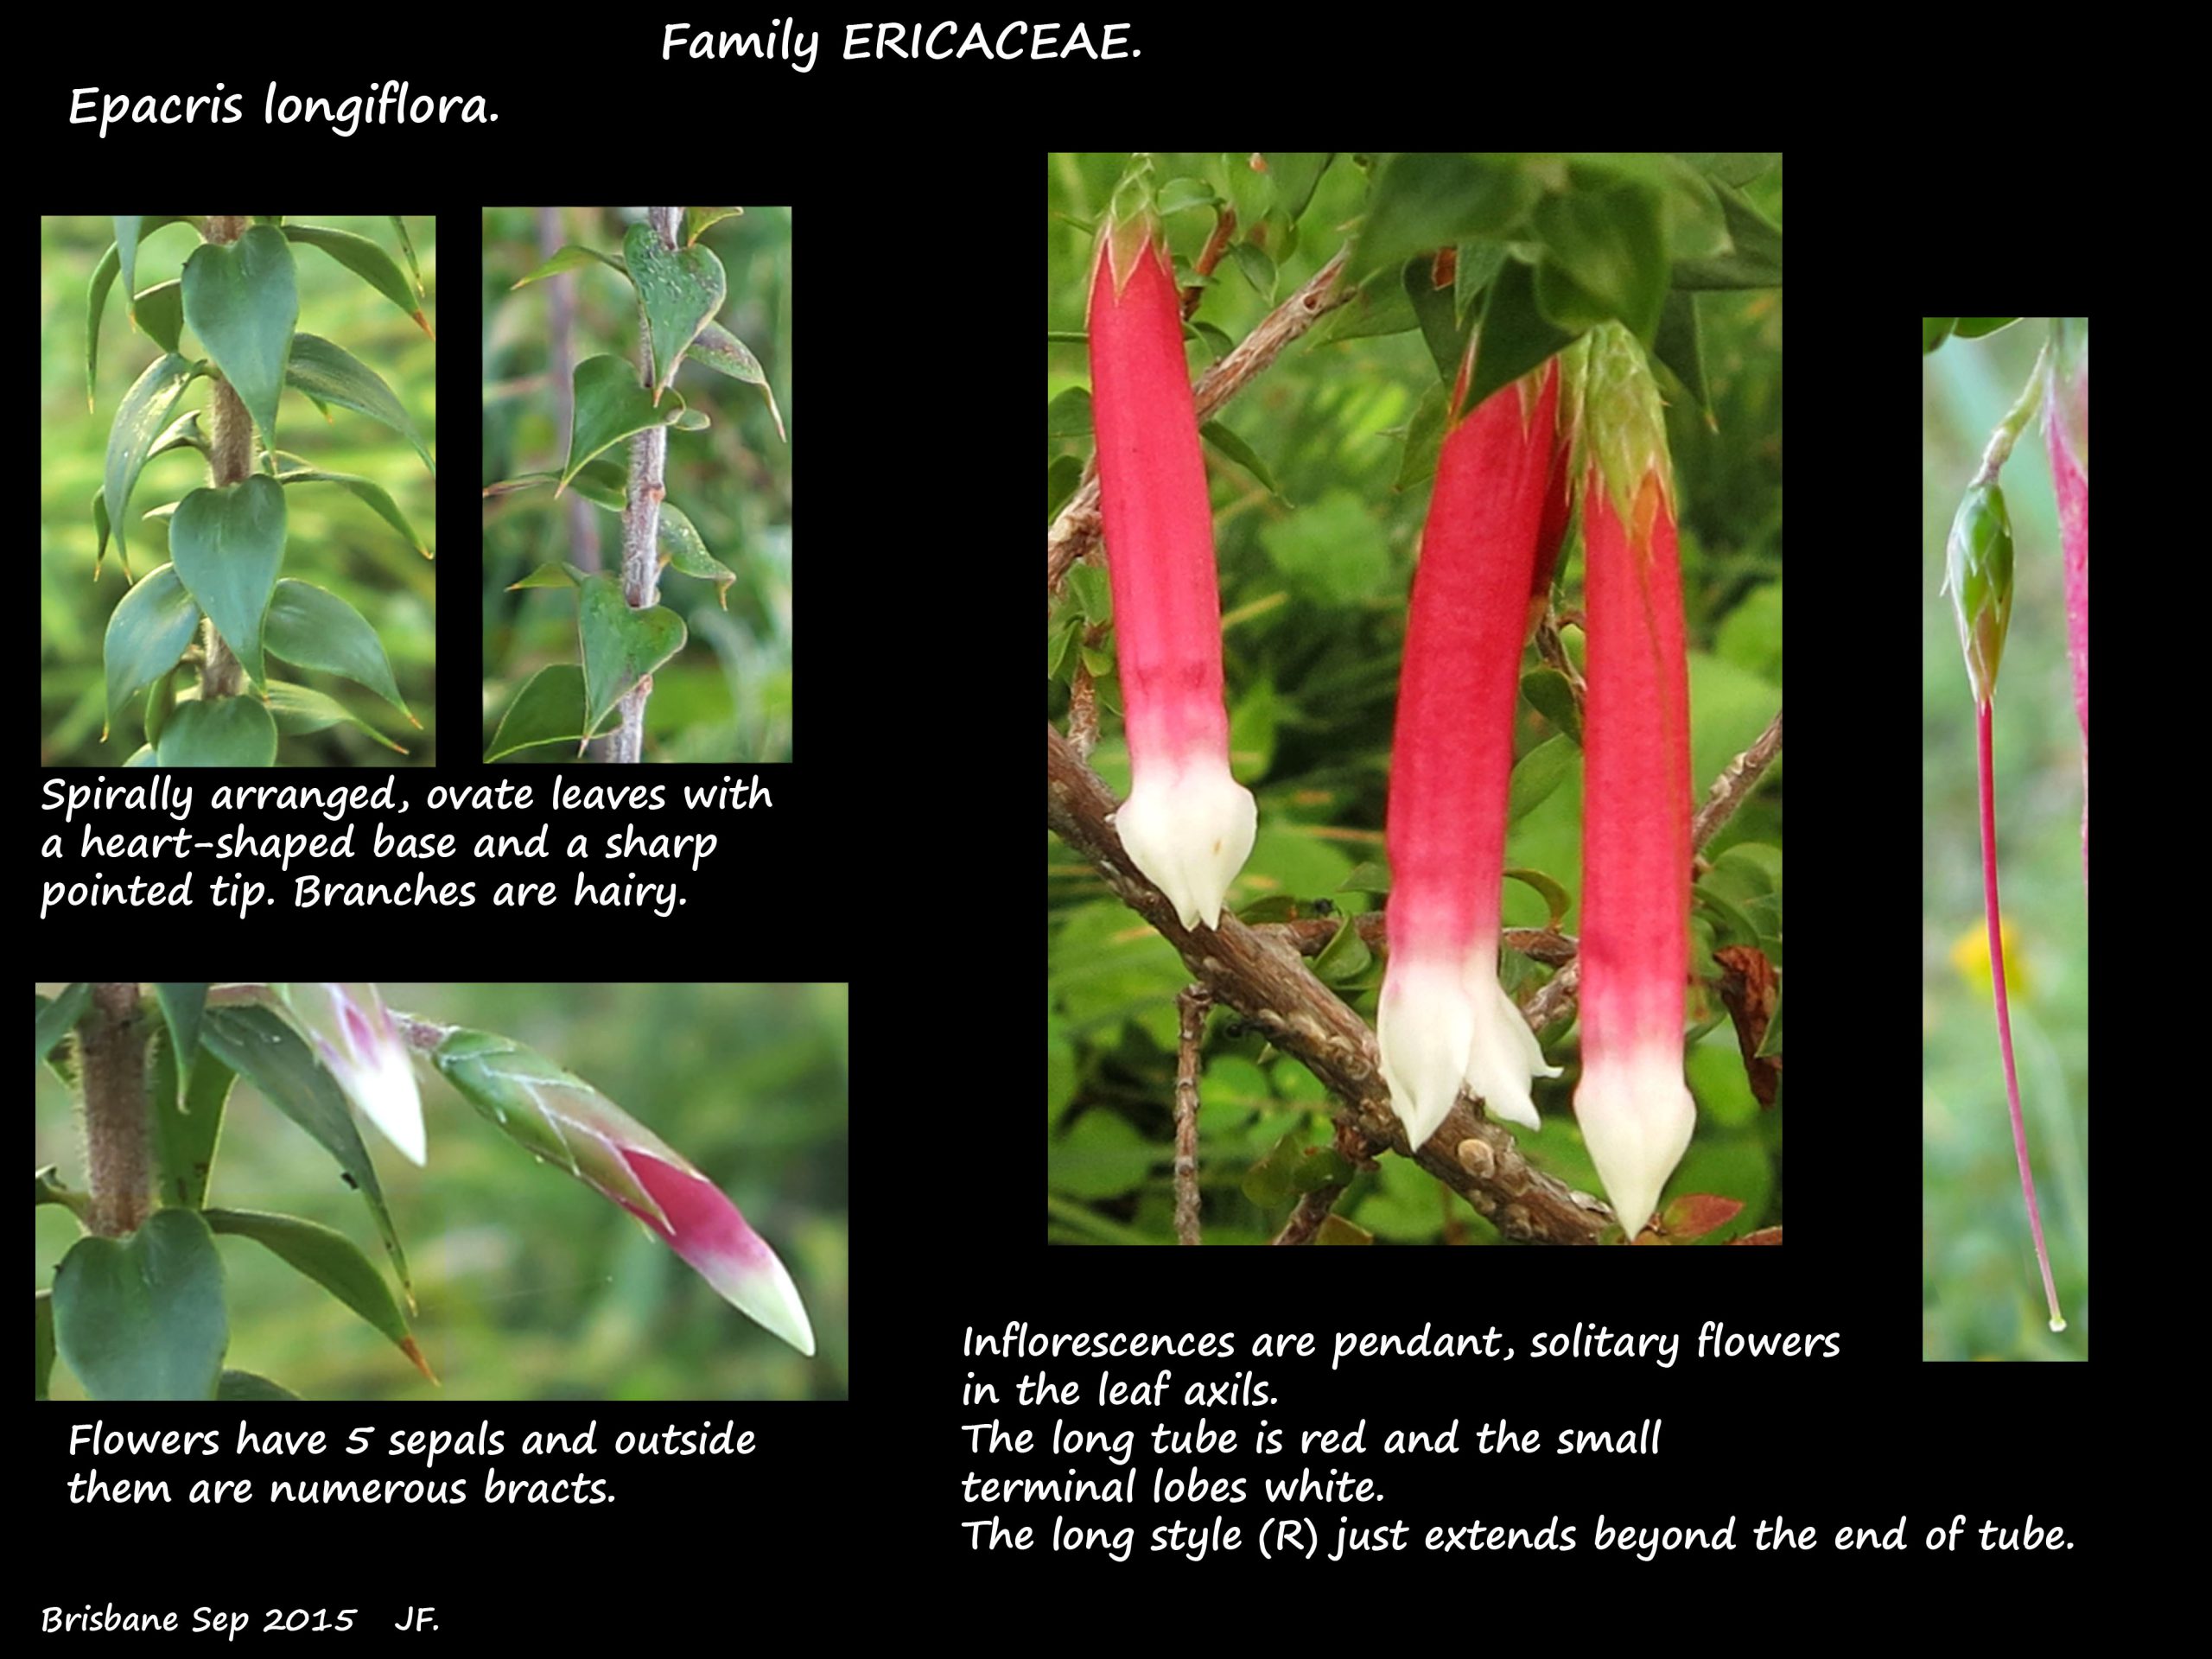 1 Epacris longiflora leaves & flowers